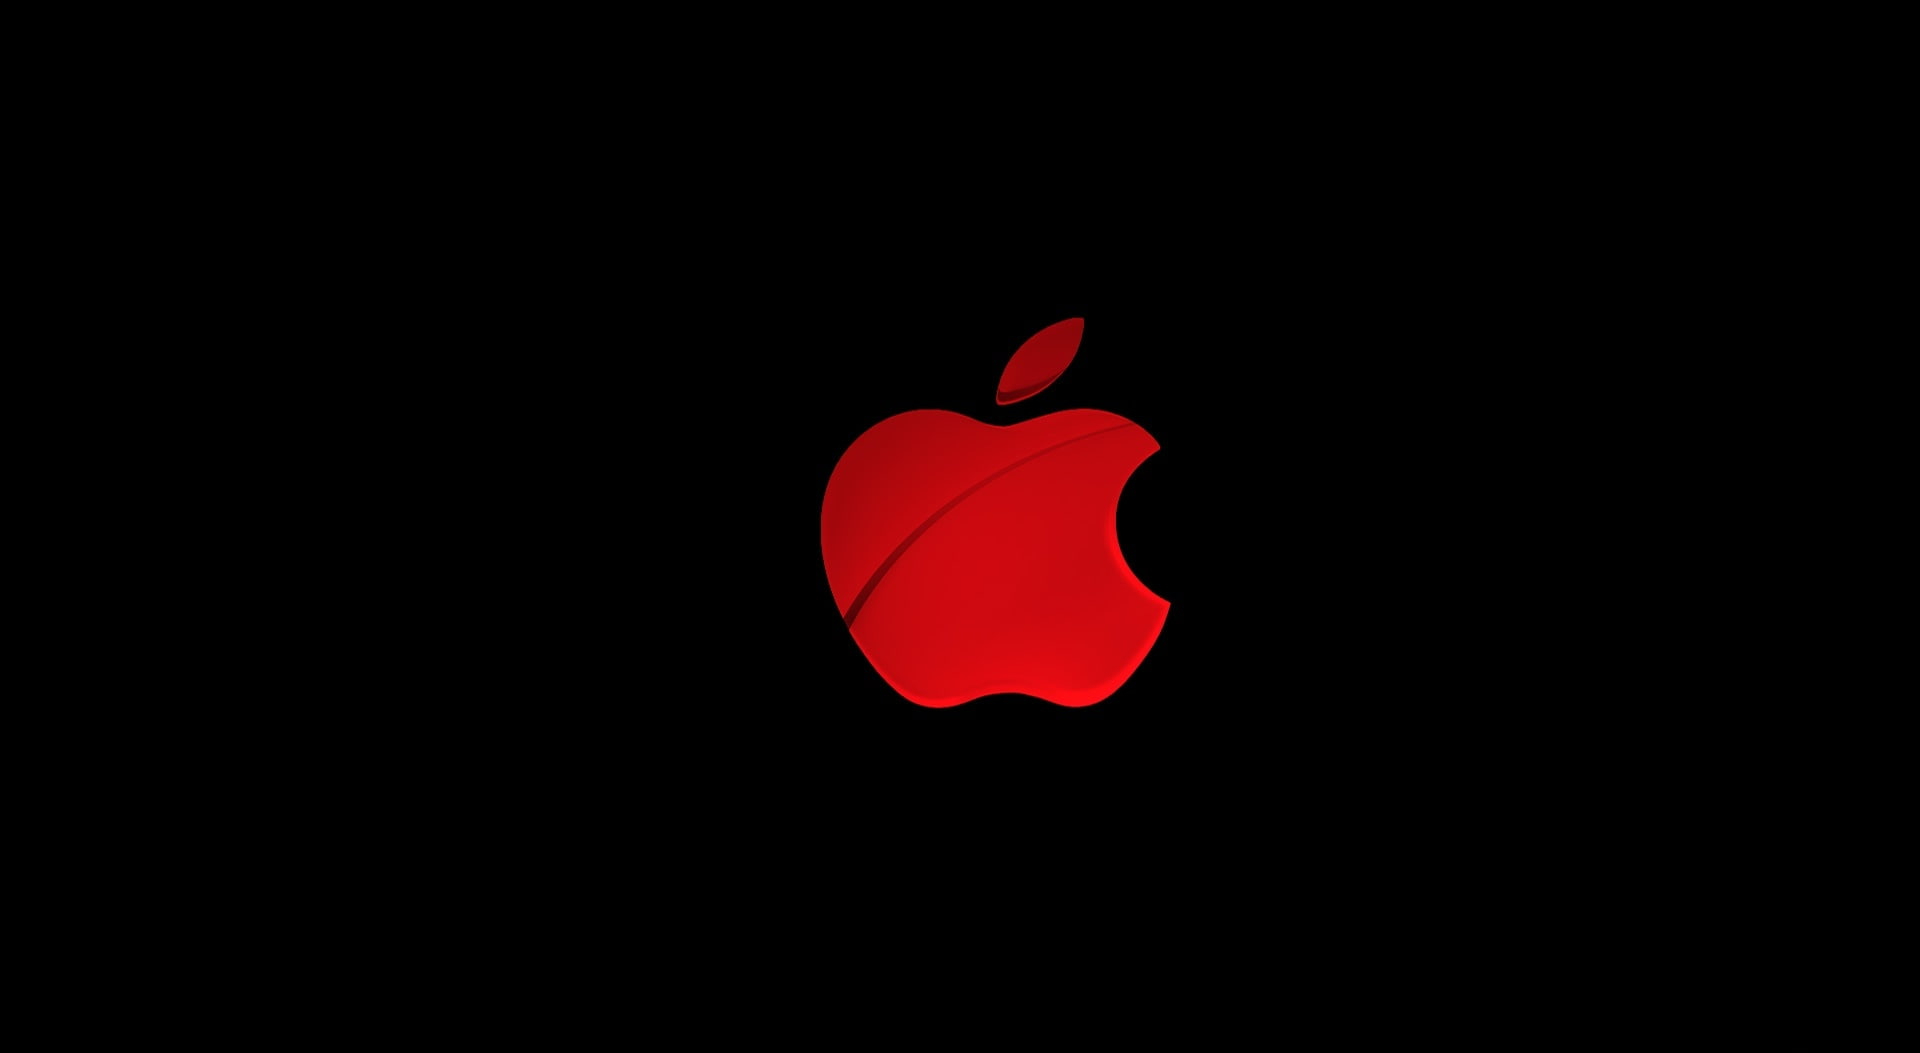 Wallpaper Apple, Red Apple Logo, Computers, Mac, Black